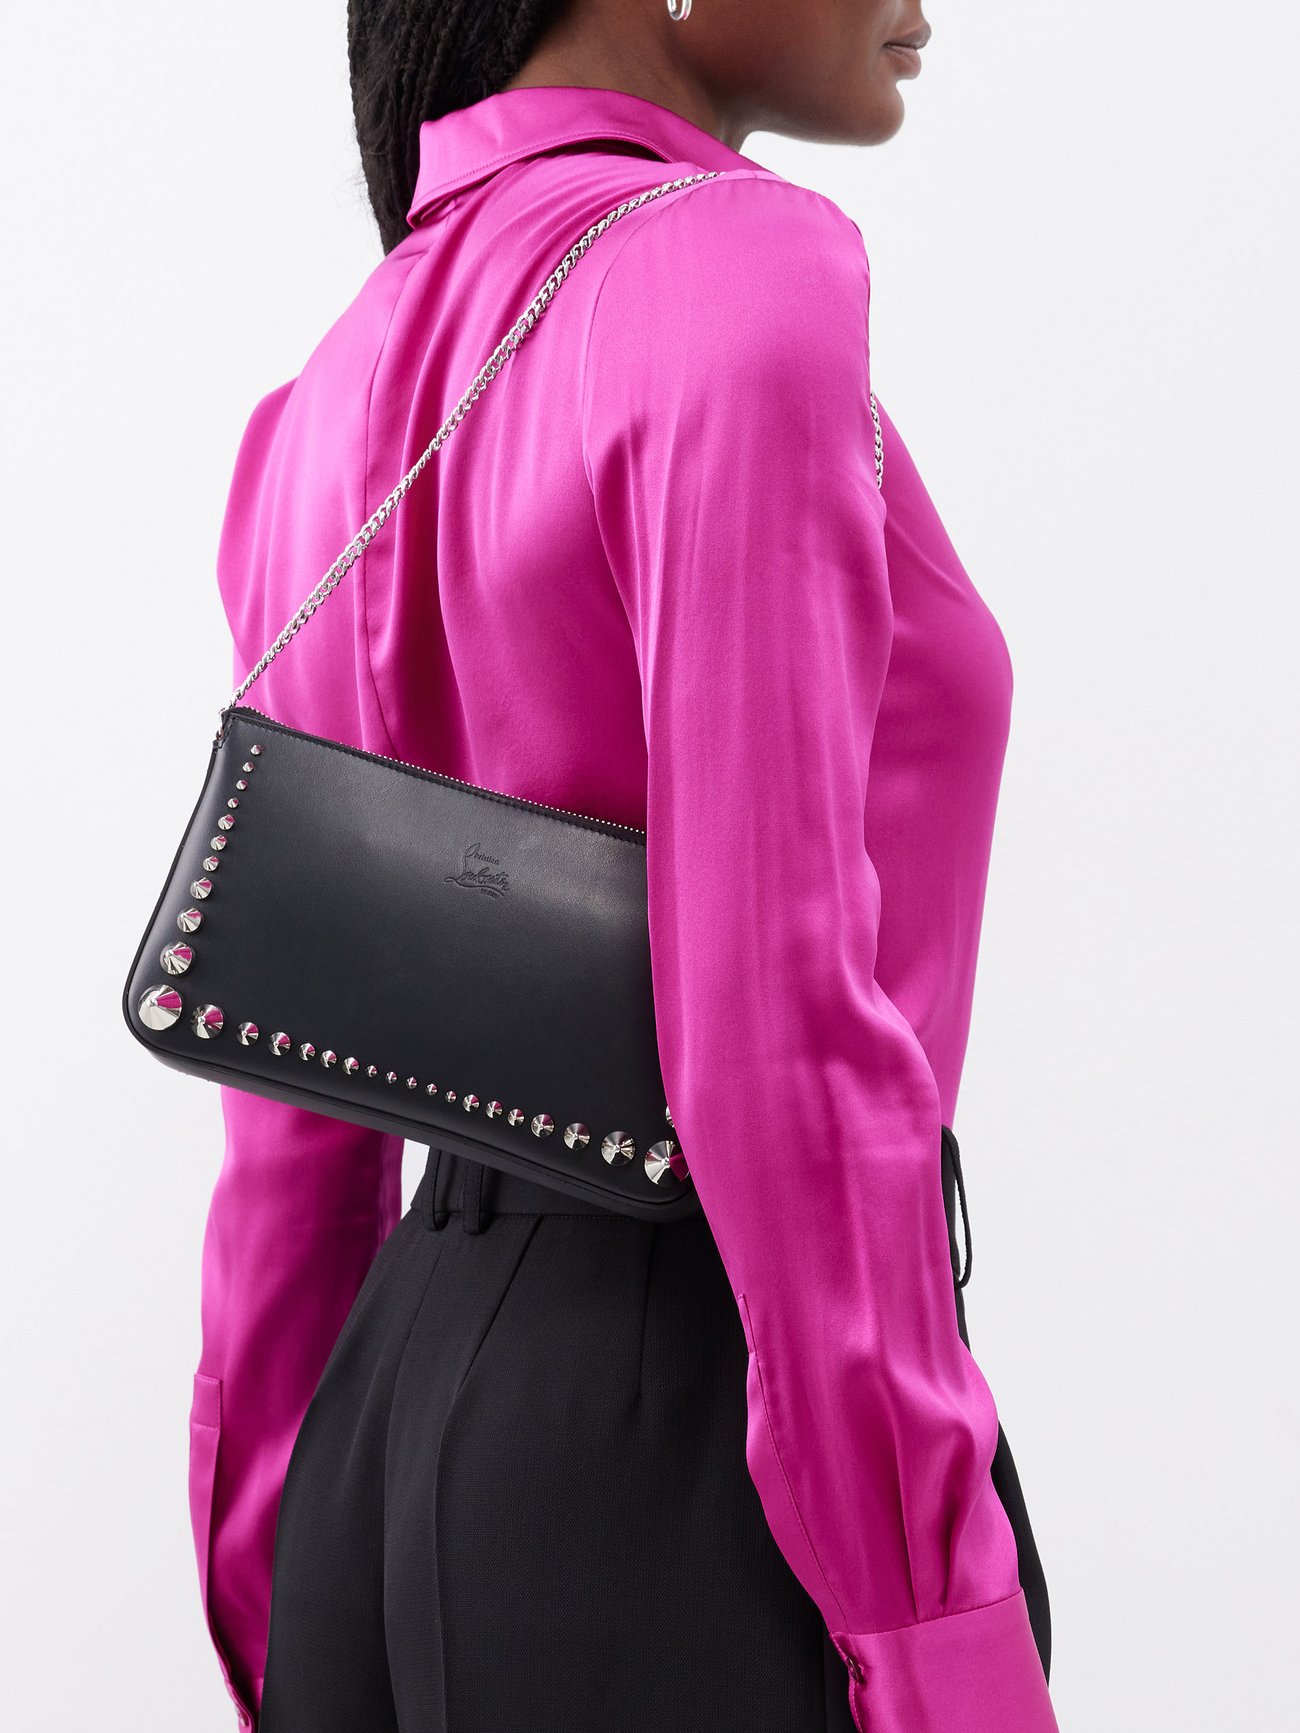 Loubila - Shoulder bag - Calf leather, rubber and spikes - Black - Christian  Louboutin